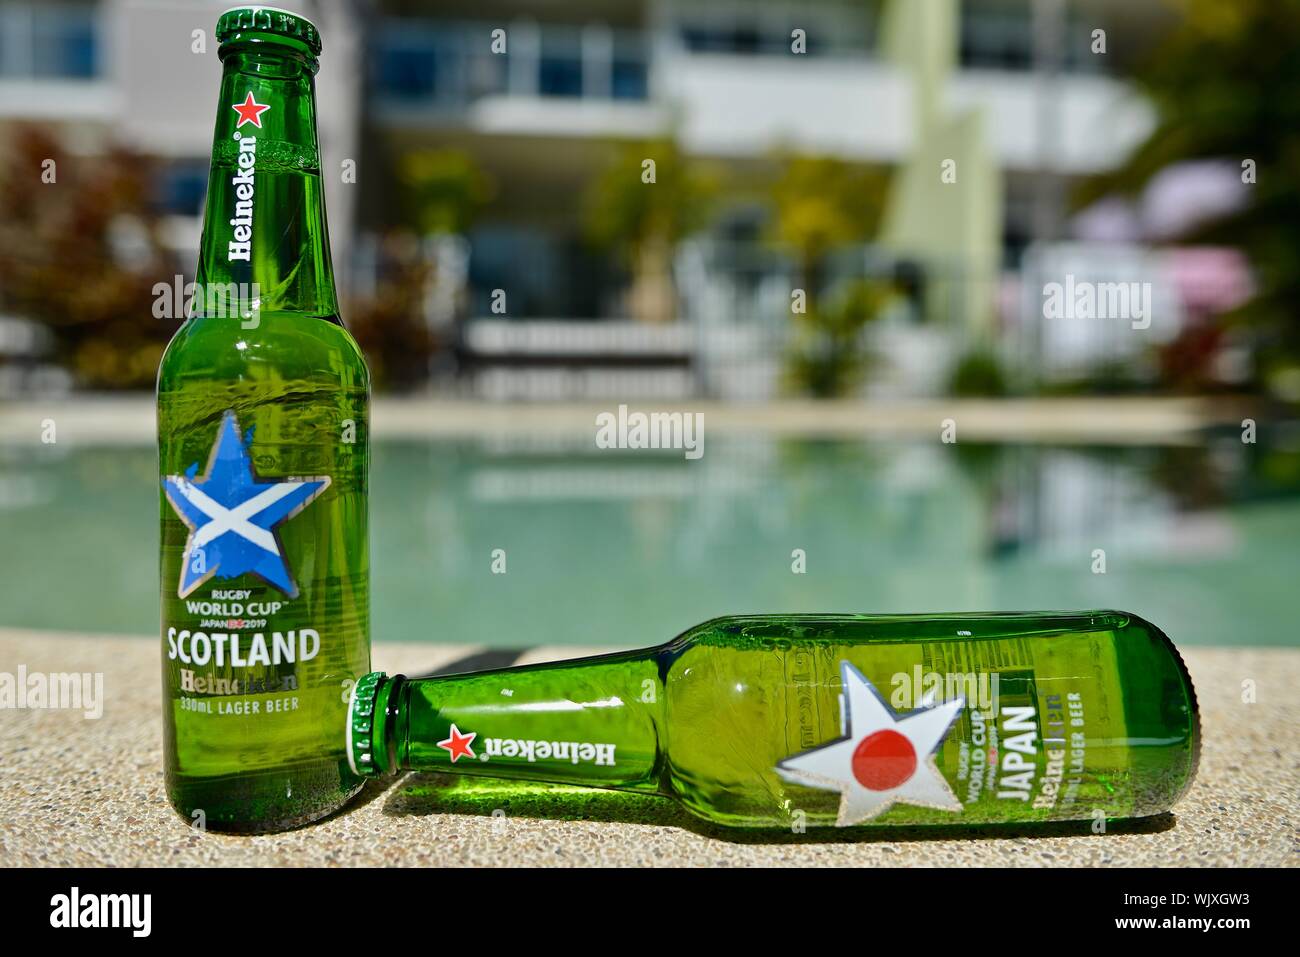 Japan versus Scotland, Scotland wins, Heineken 2019 Japan Rugby world cup beer bottles Stock Photo